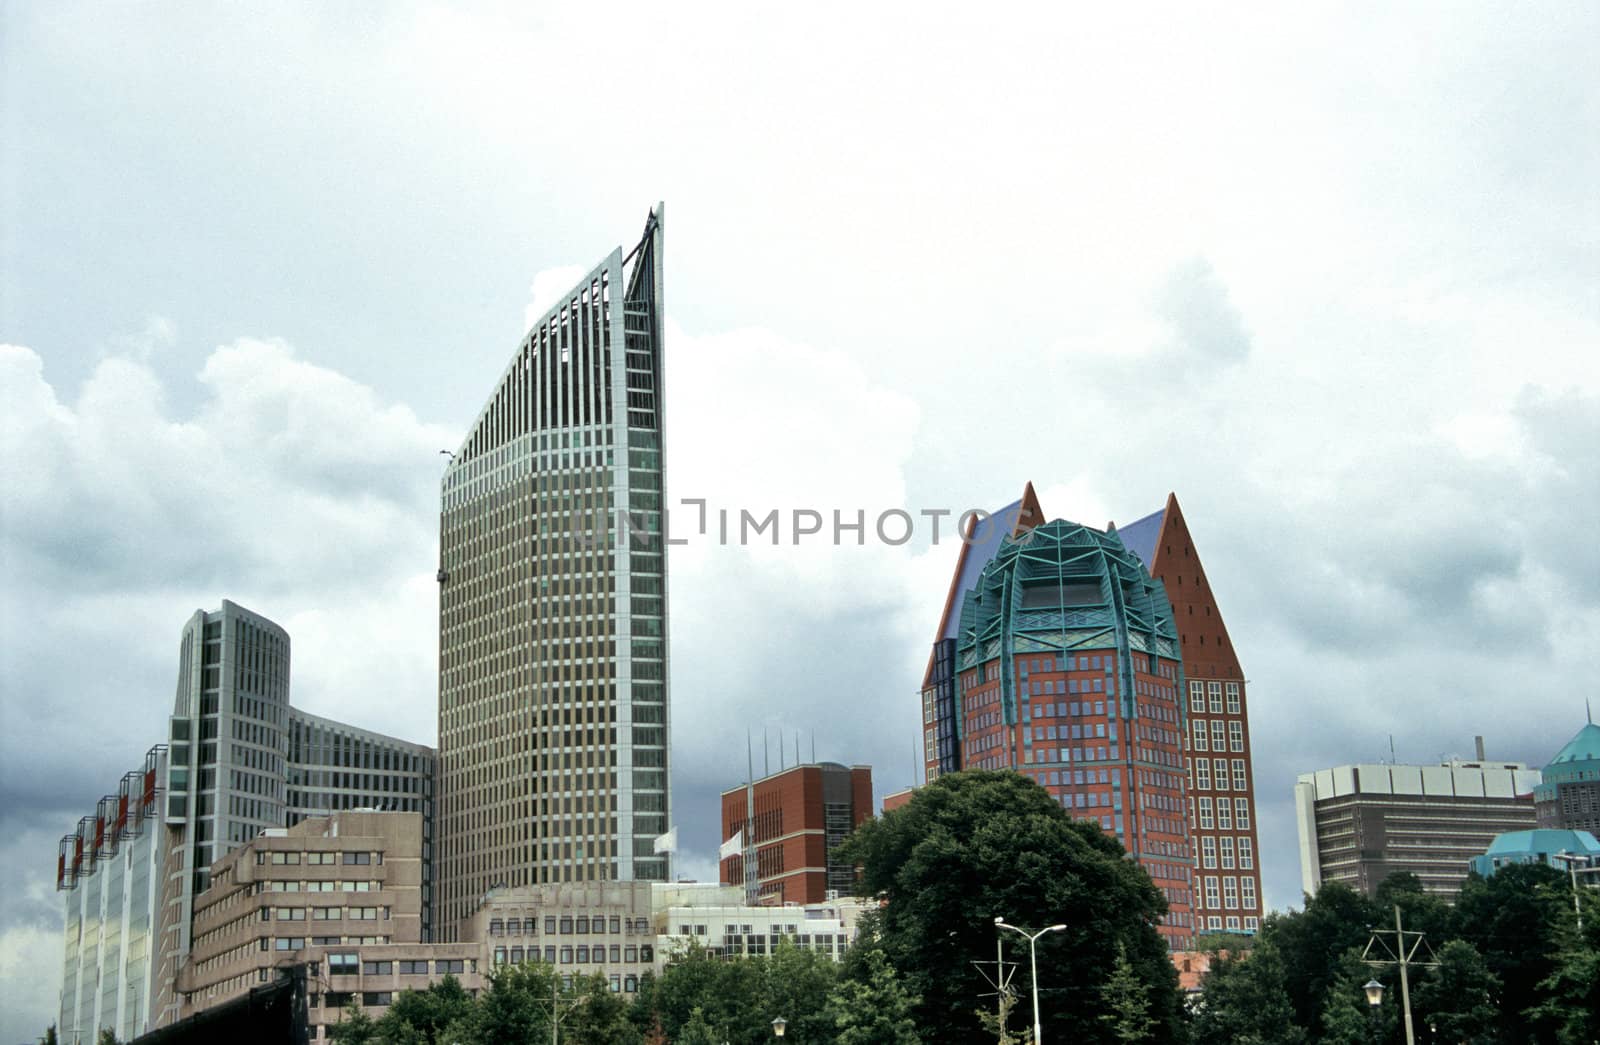 Modern architecture dominates the skyline of Den Haag, The Netherlands.